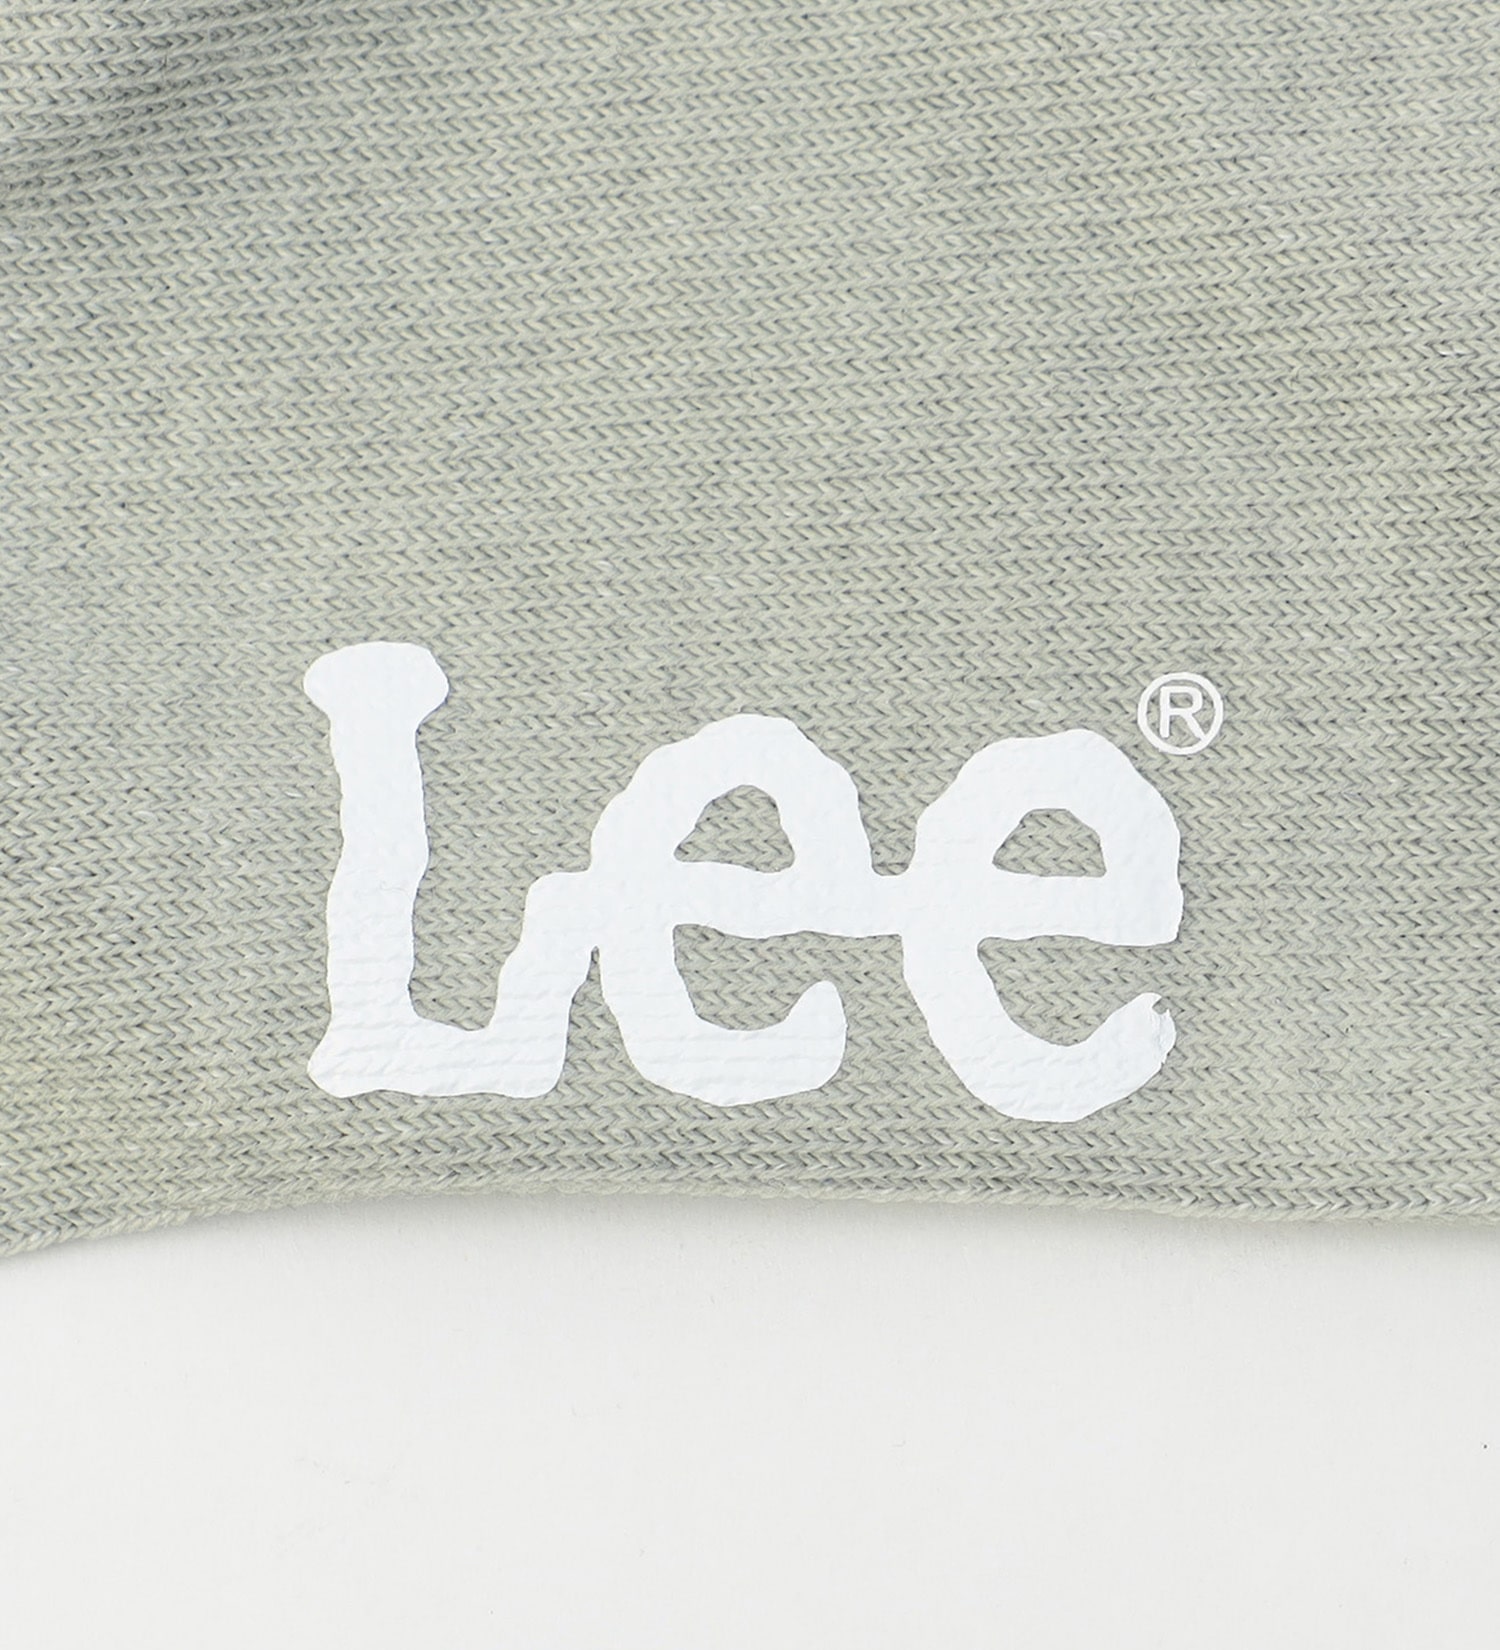 Lee(リー)のLee メンズショートソックス 3足組|ファッション雑貨/靴下/メンズ|その他